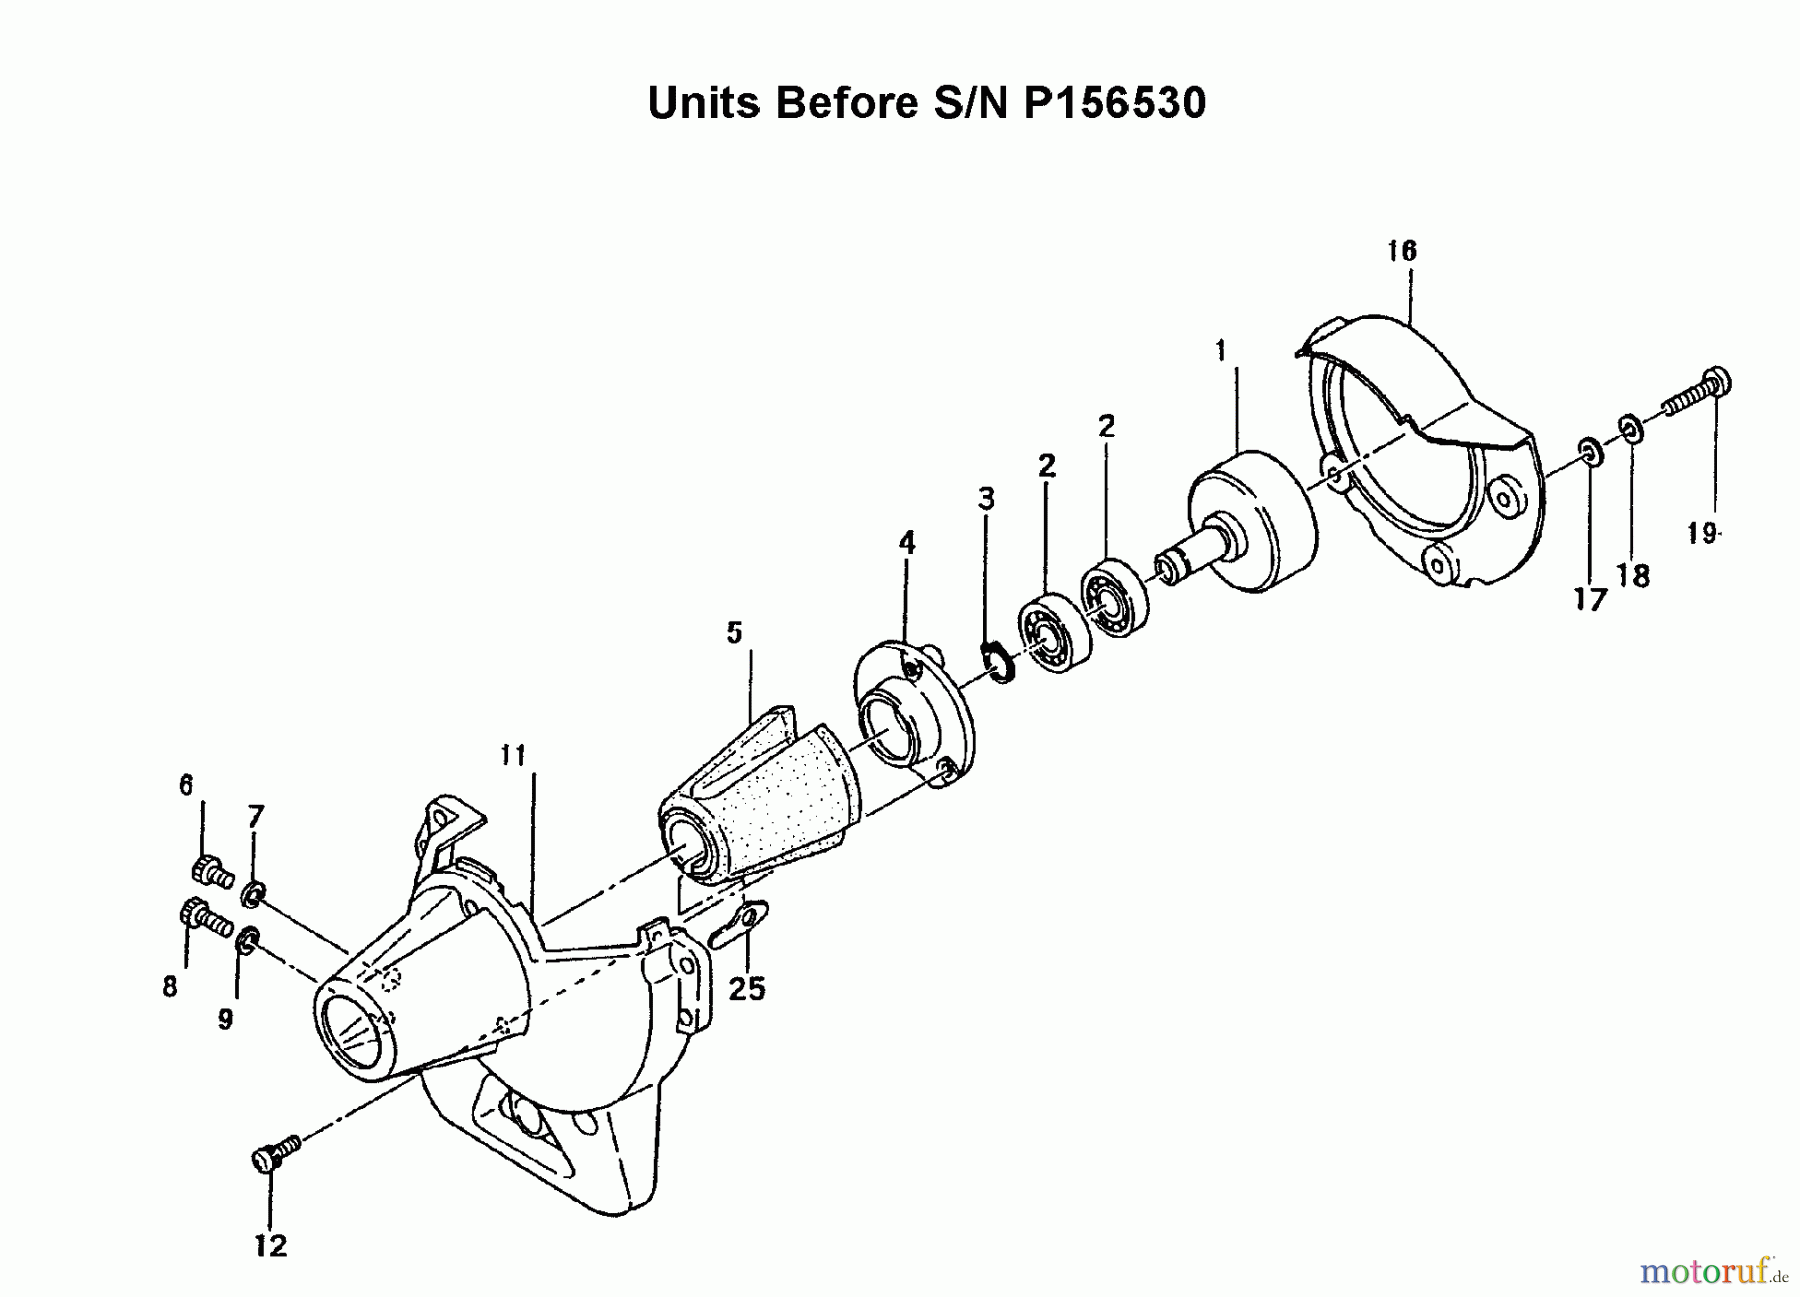  Tanaka Trimmer, Motorsensen TBC-220 - Tanaka Grass Trimmer / Brush Cutter Clutch Case (Units prior to P156530)